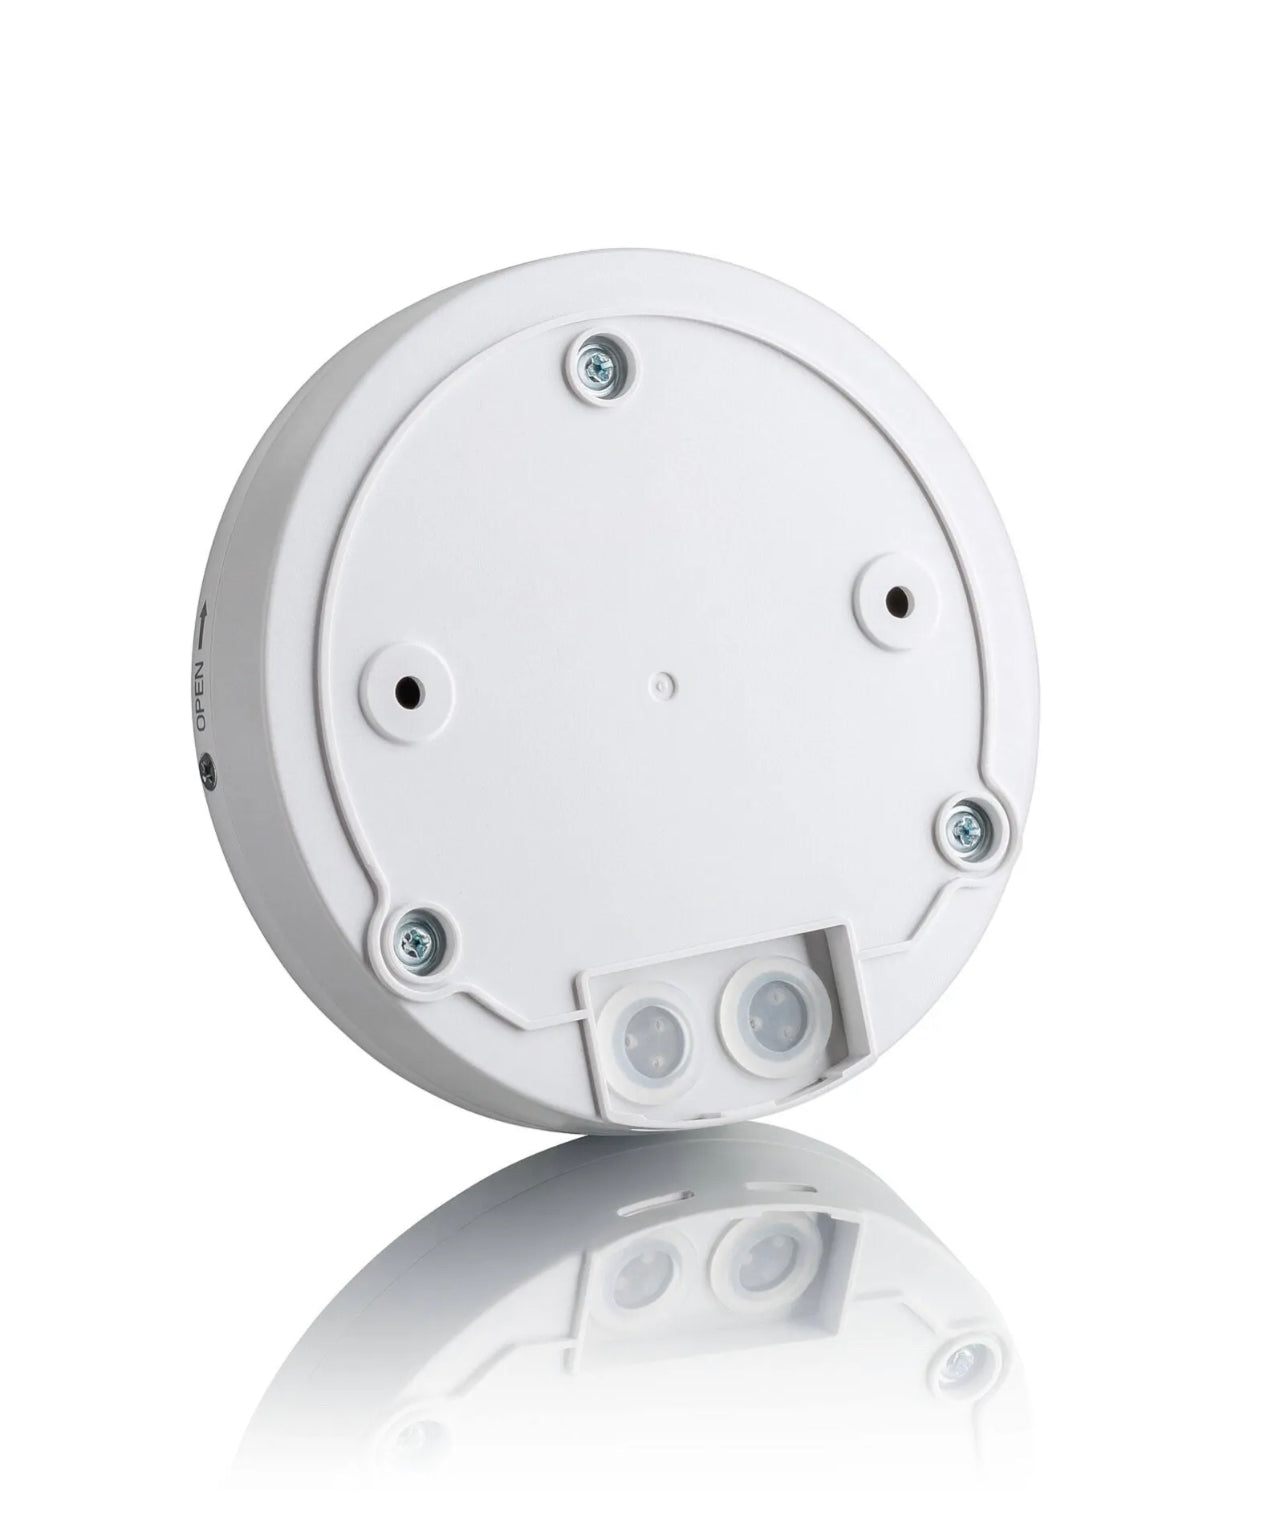 Ceiling PIR Infrared Motion Sensor 360" manual override IP65 bathroom UKEW